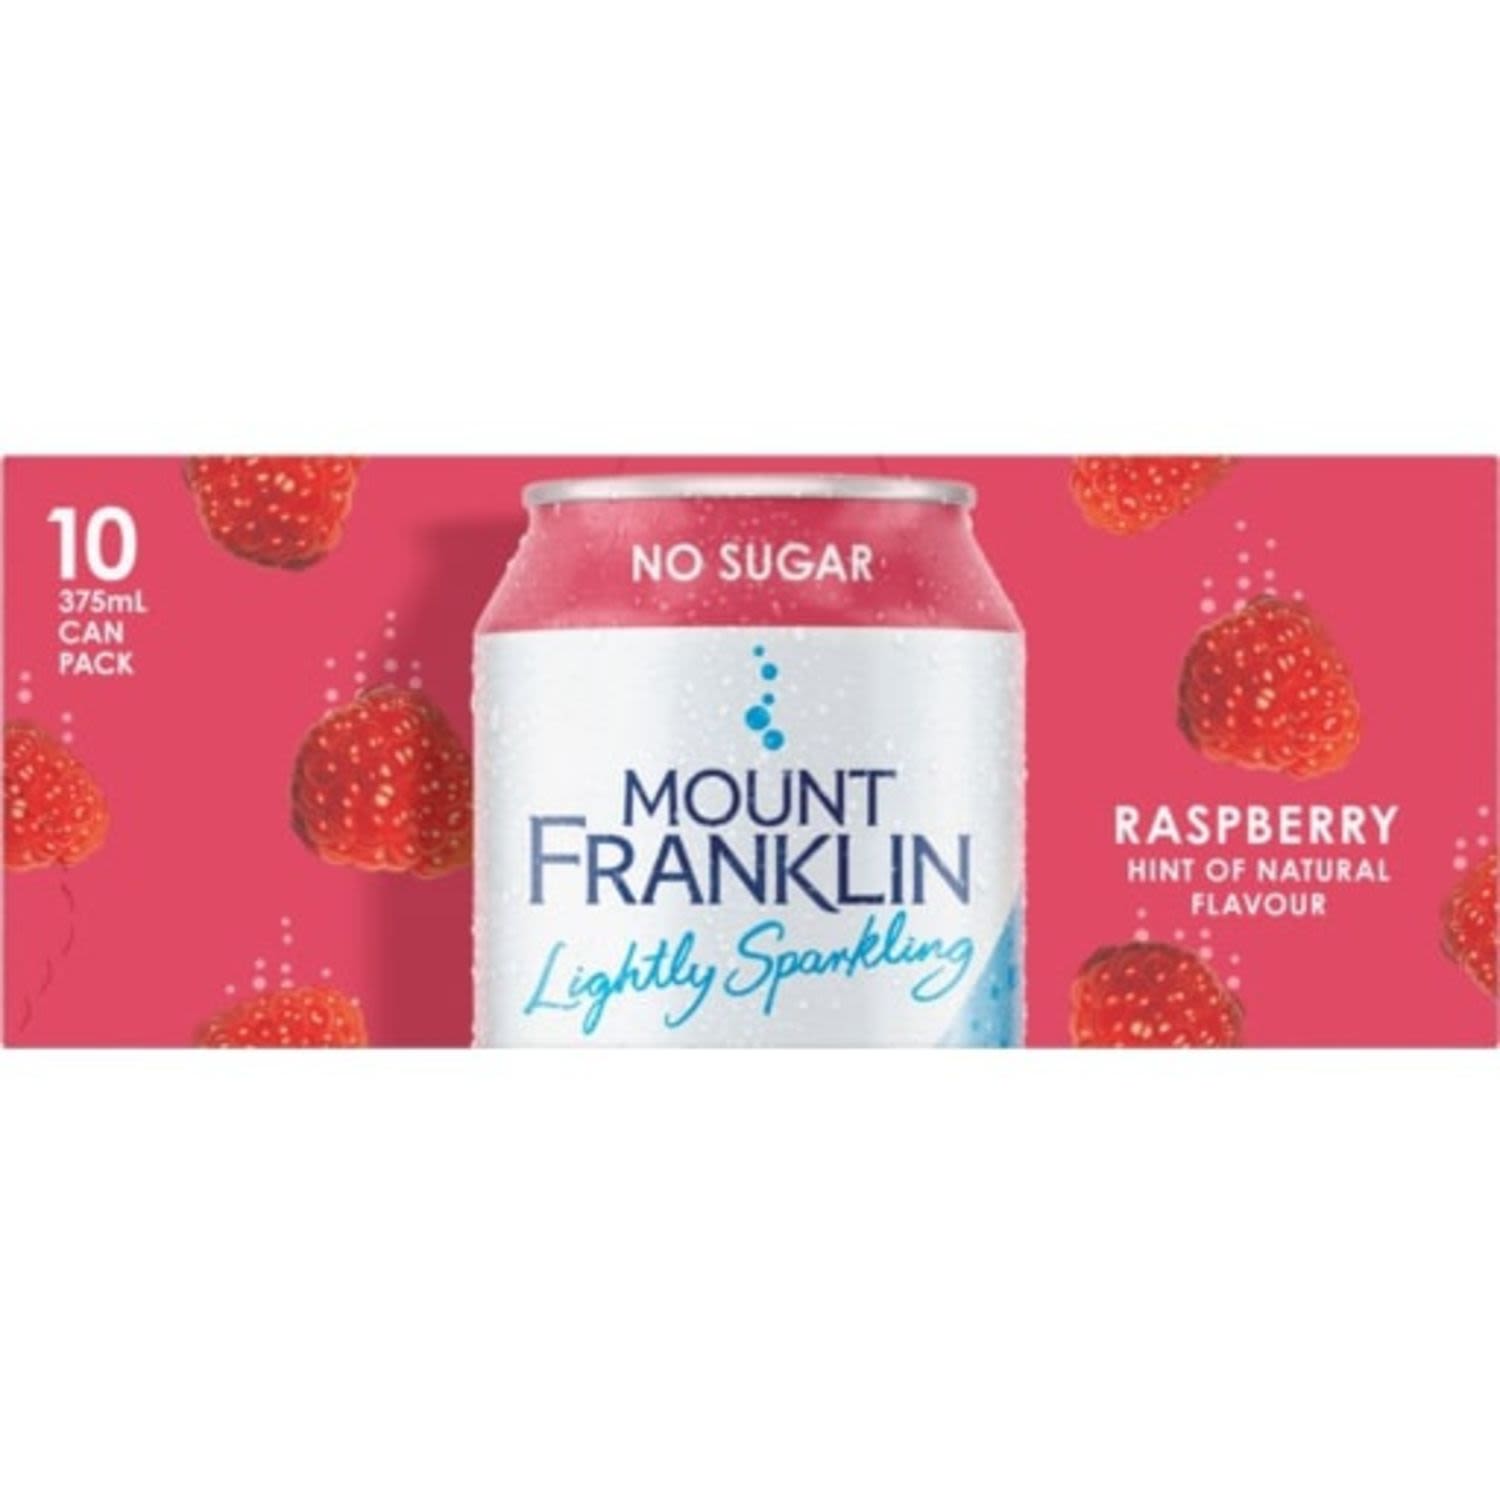 Mount Franklin Lightly Sparkling Raspberry, 10 Each